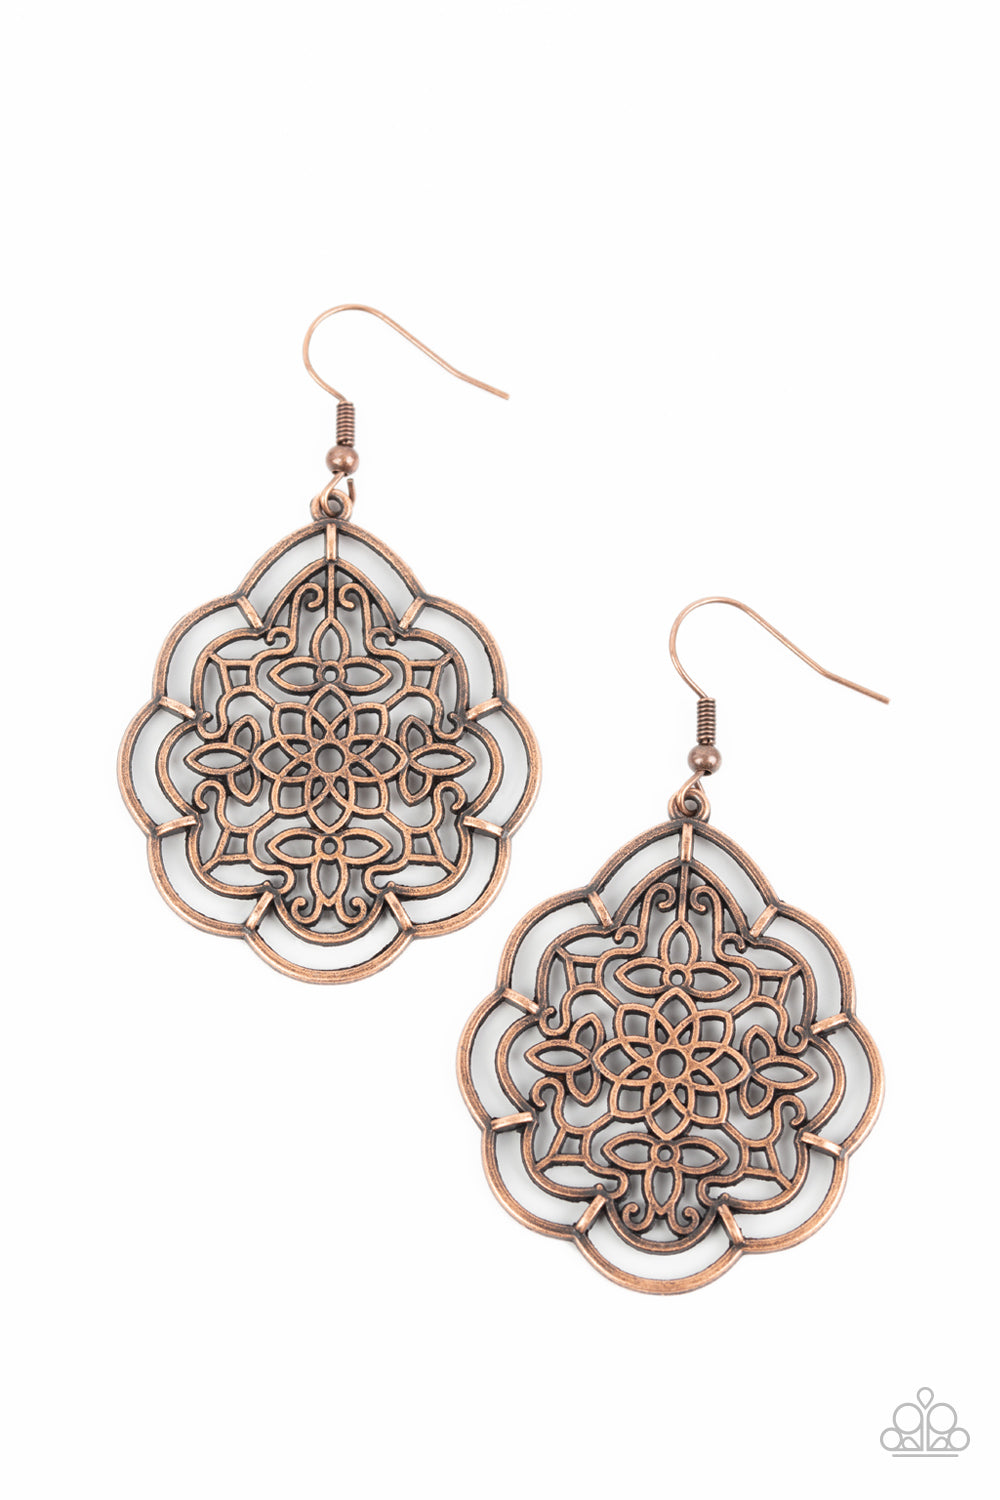 Tour de Taj Mahal - copper - Paparazzi earrings